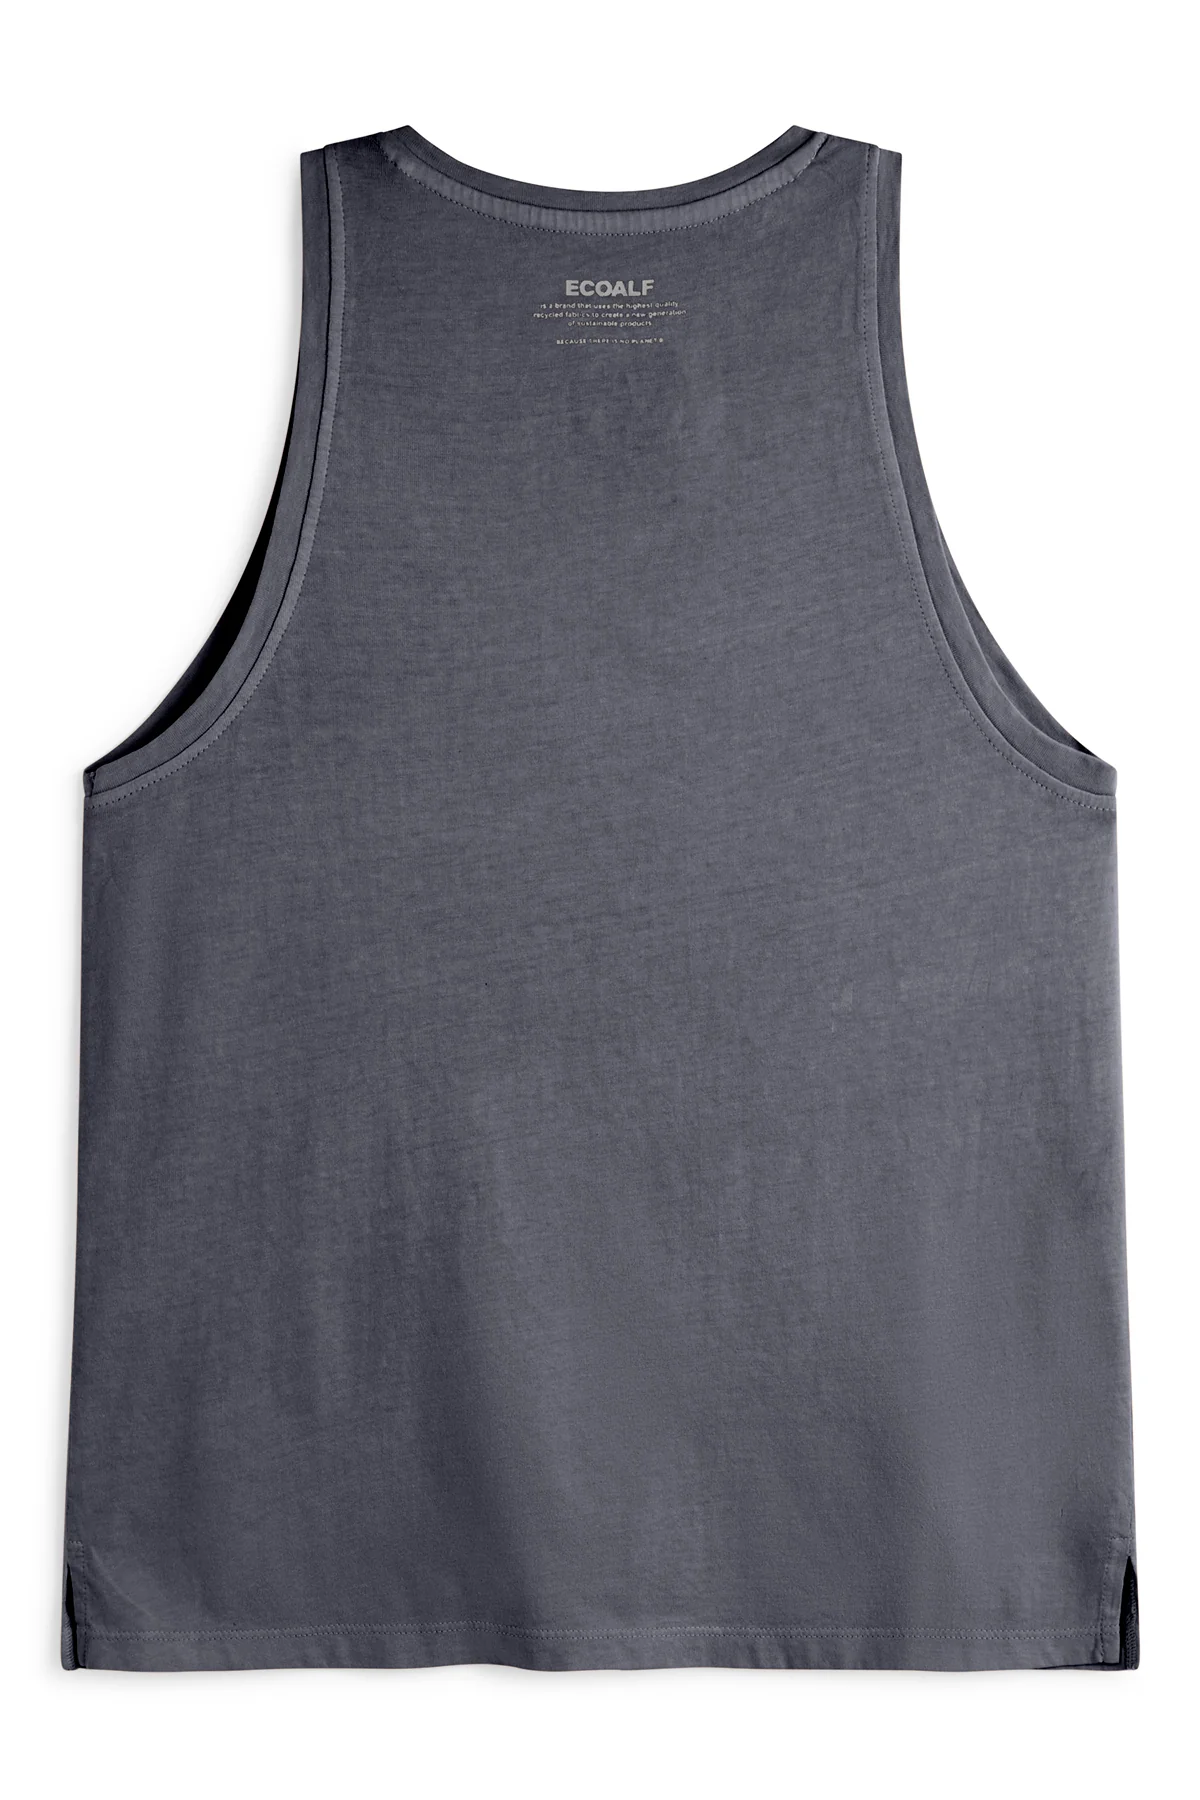 ECOALF camiseta sin mangas color gris - 4